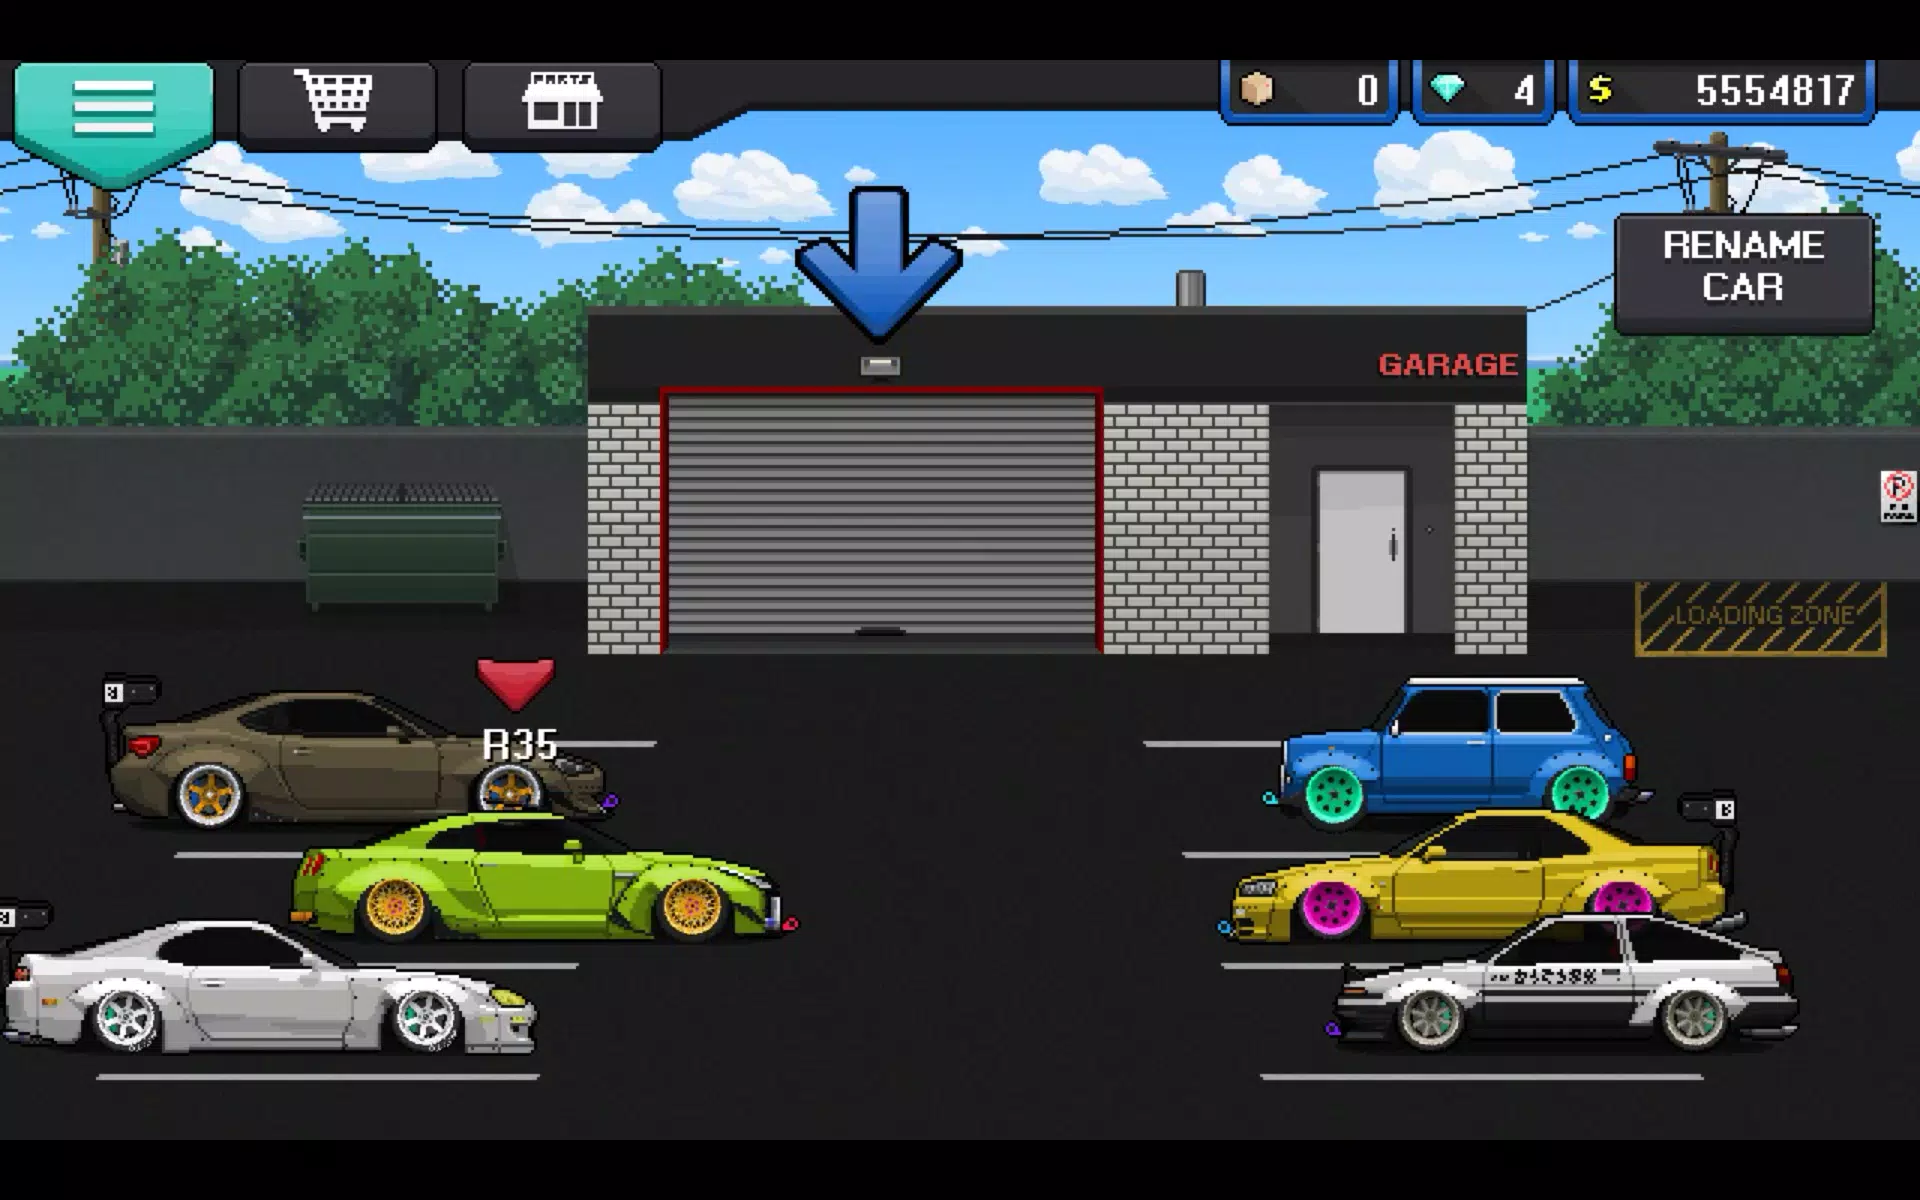 pixel-car-racer